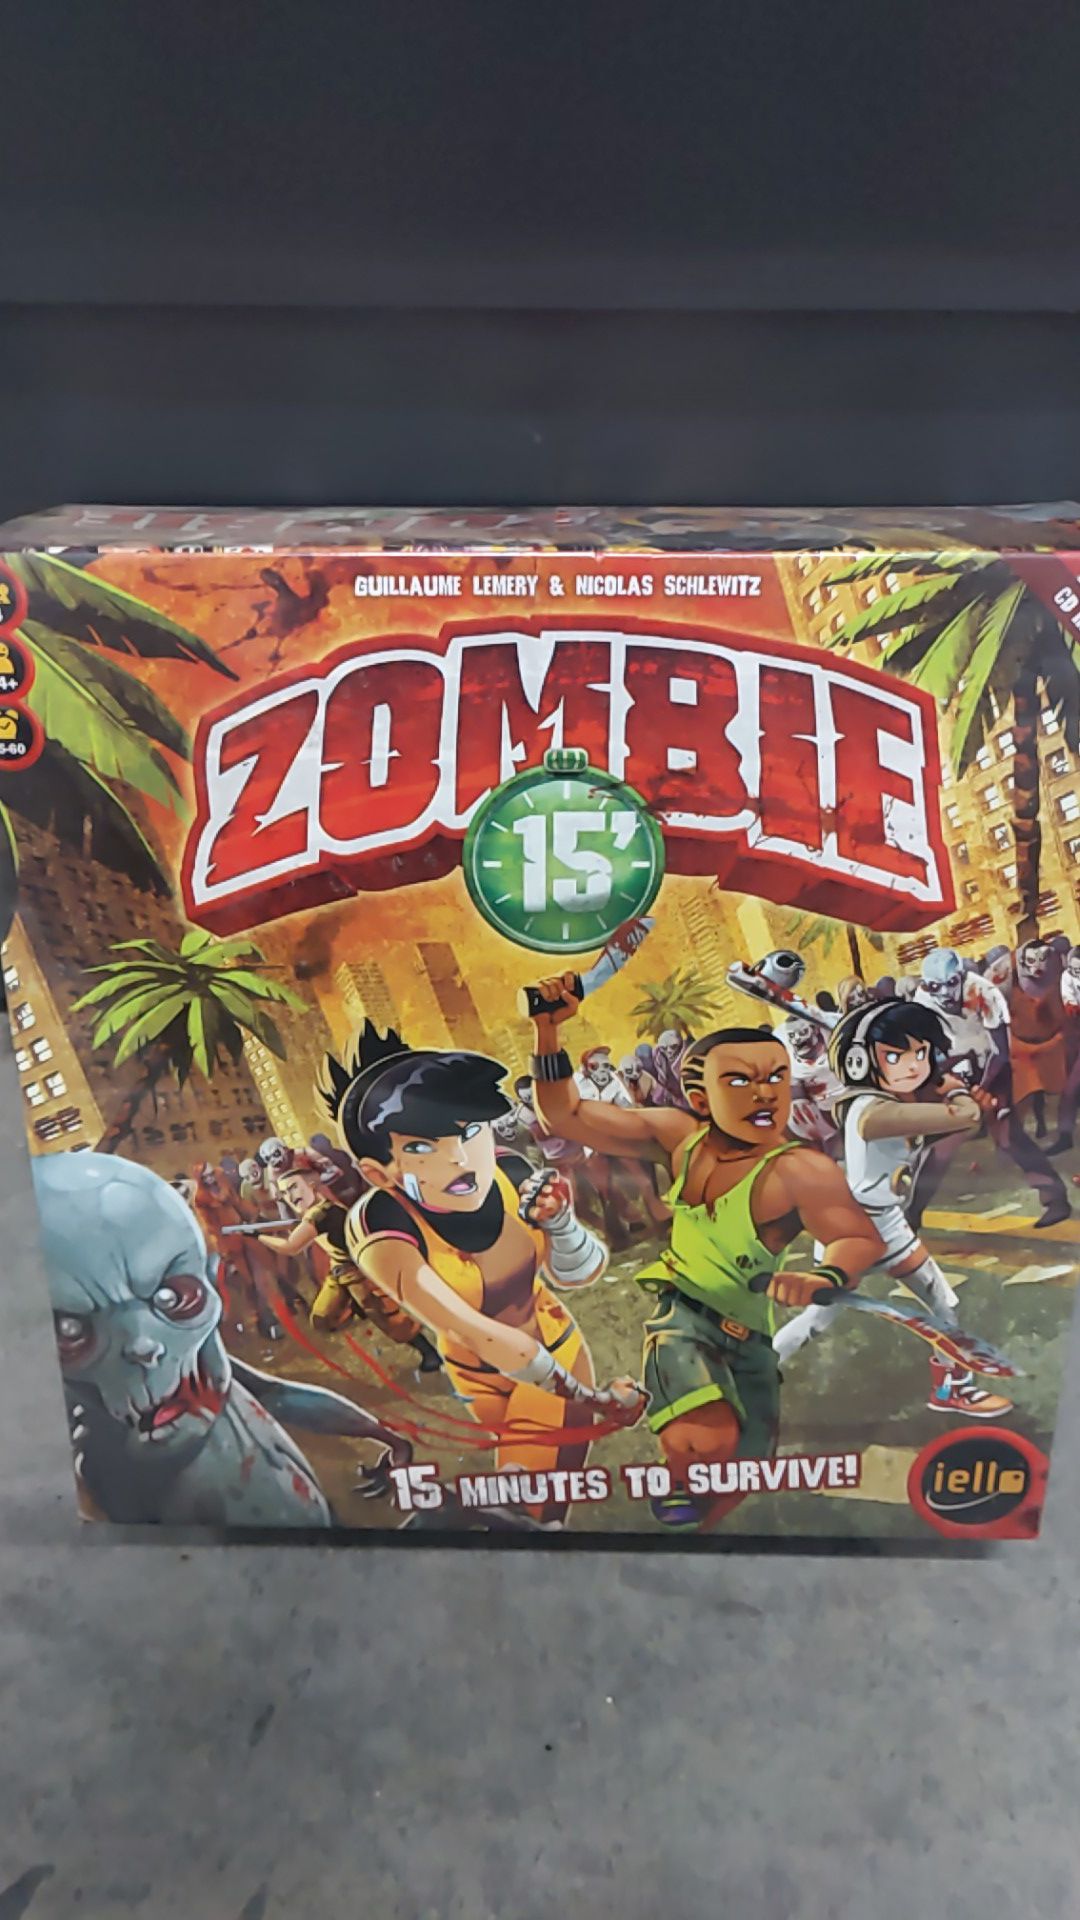 Zombie 15' Board Game by Jello